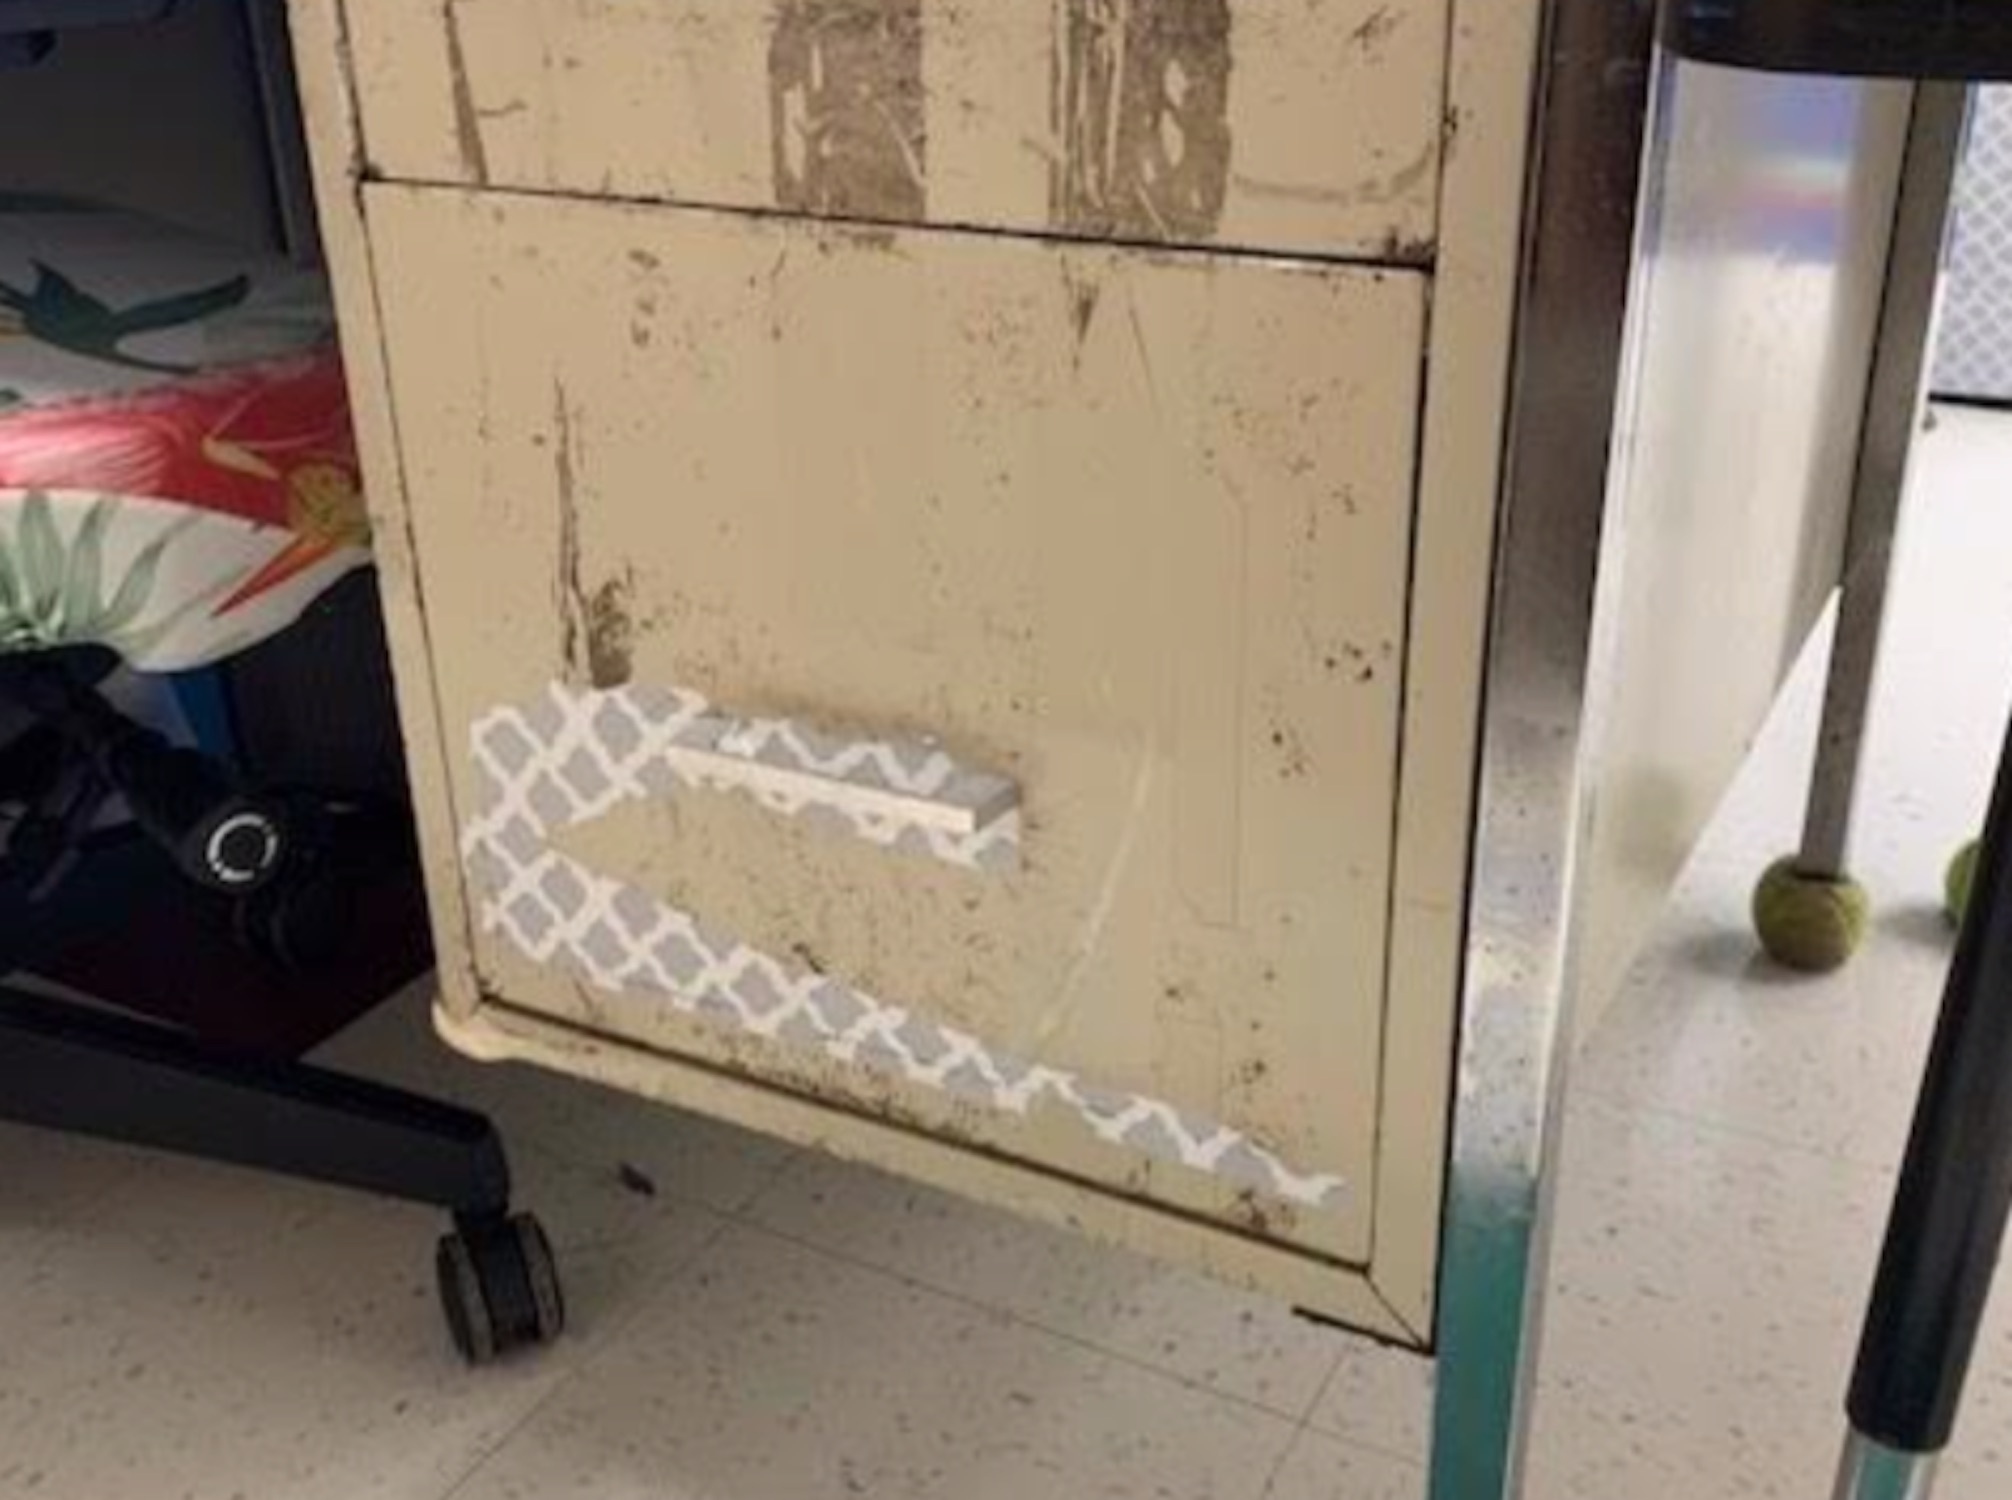 John M. Marshall Elementary School teacher desks are worn and damaged. EAST HAMPTON SCHOOL DISTRICT